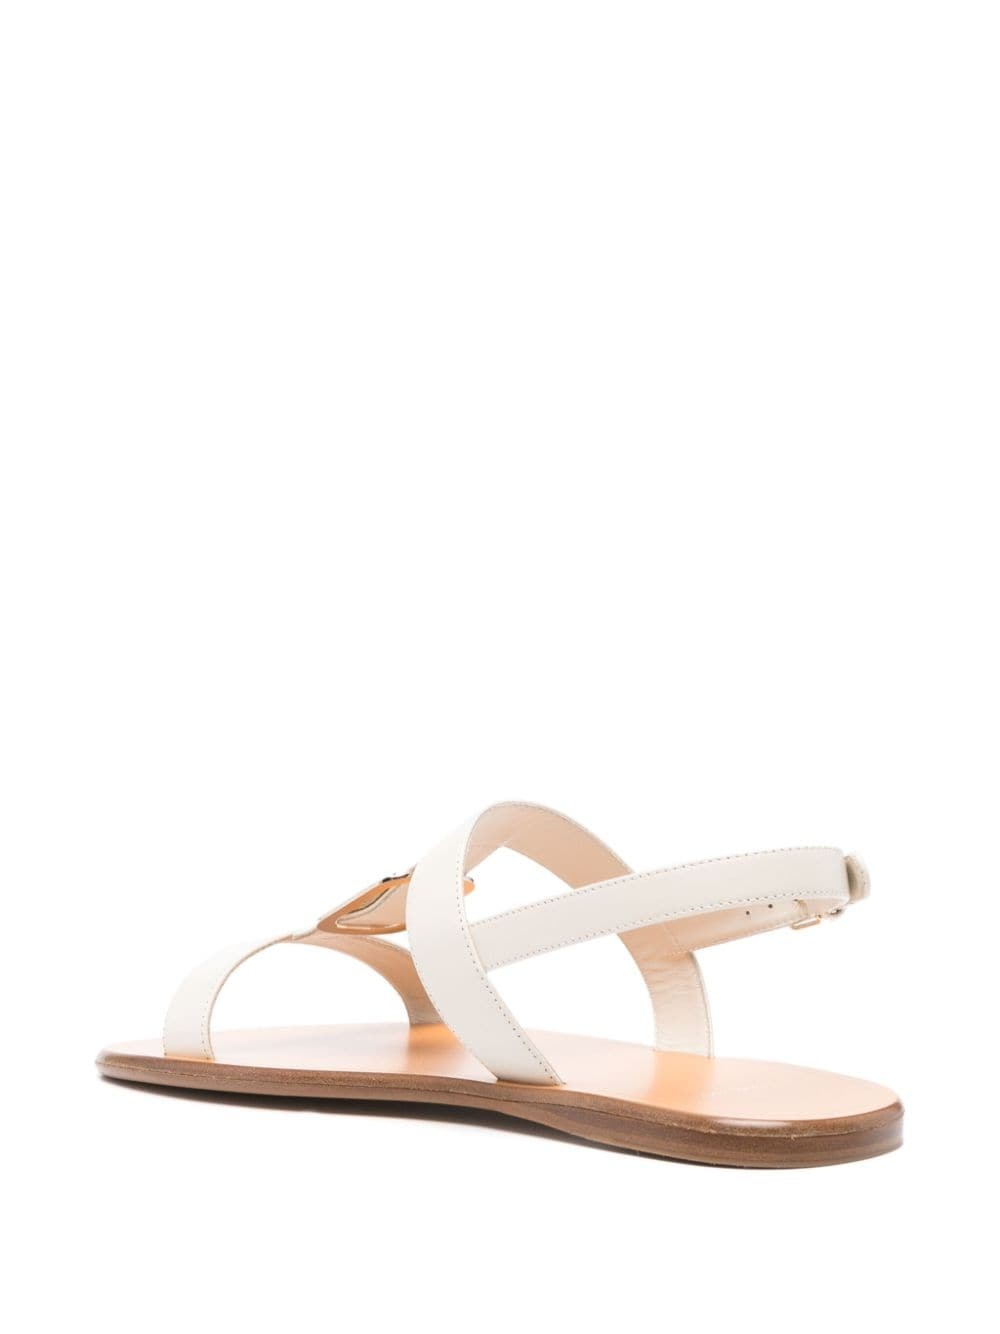 Capri leathers sandals - 3